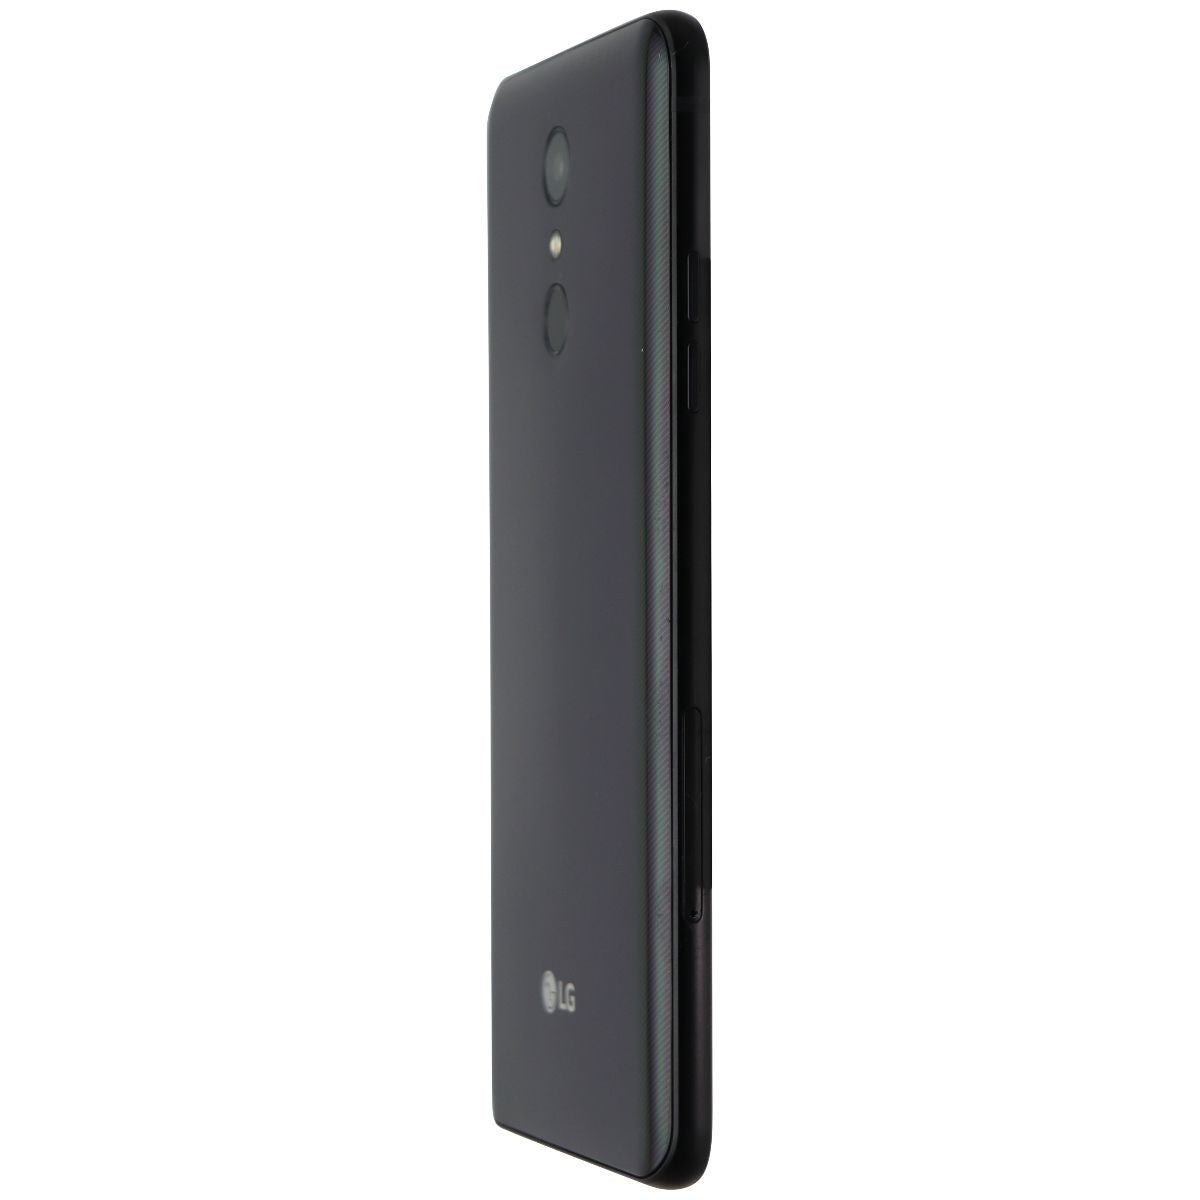 LG Stylo 4 (LM-Q710ULM) Smartphone (GSM + Verizon) - 32GB / Black Cell Phones & Smartphones LG    - Simple Cell Bulk Wholesale Pricing - USA Seller